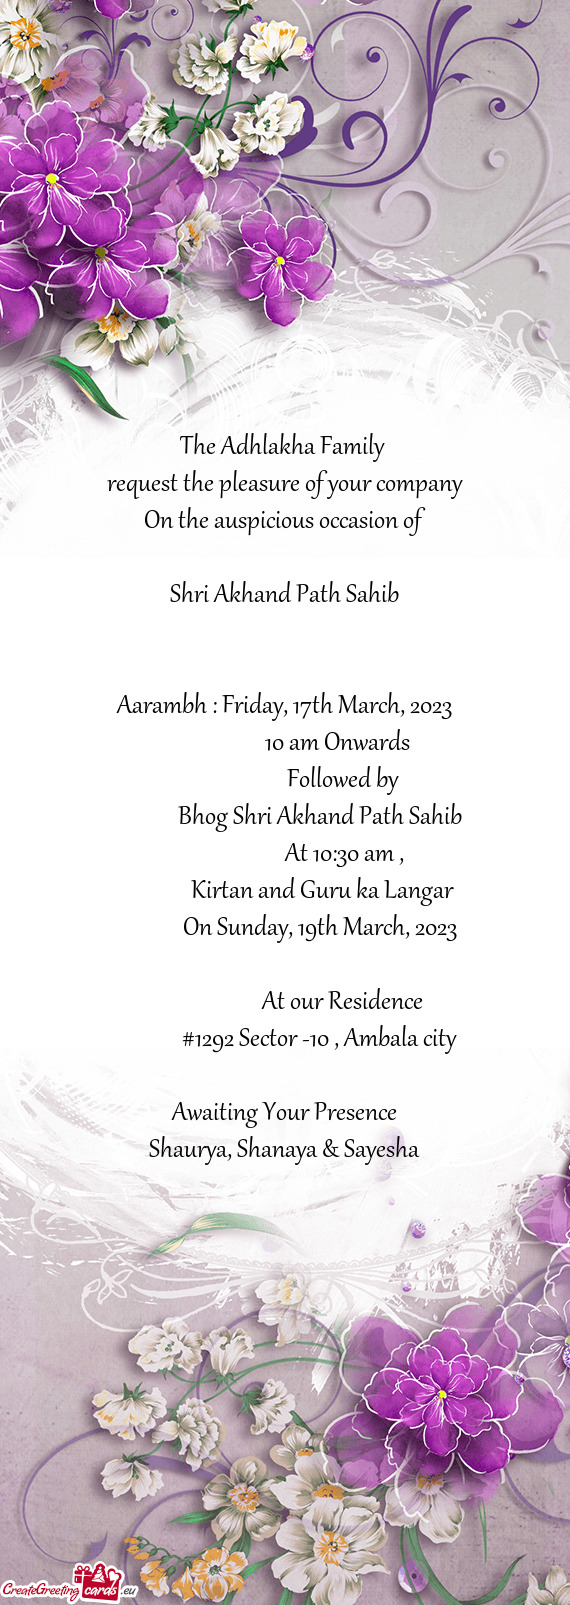 Aarambh : Friday, 17th March, 2023